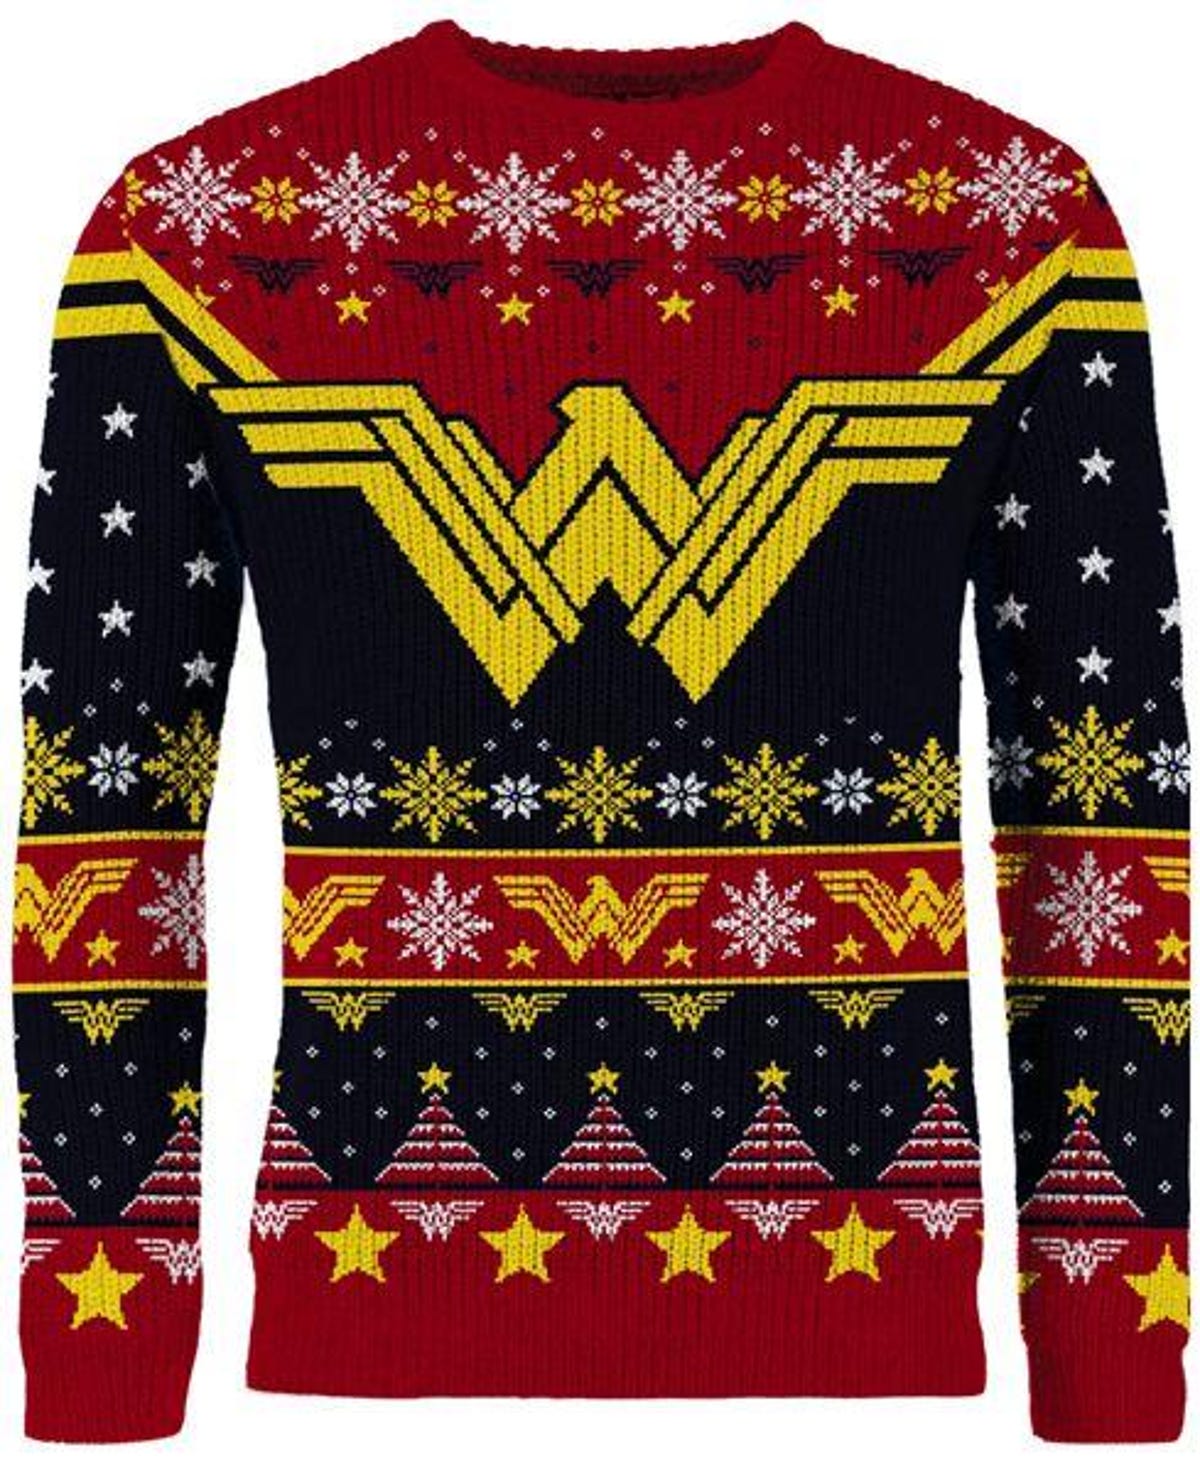 Wonder Woman Old Glory women's sweater